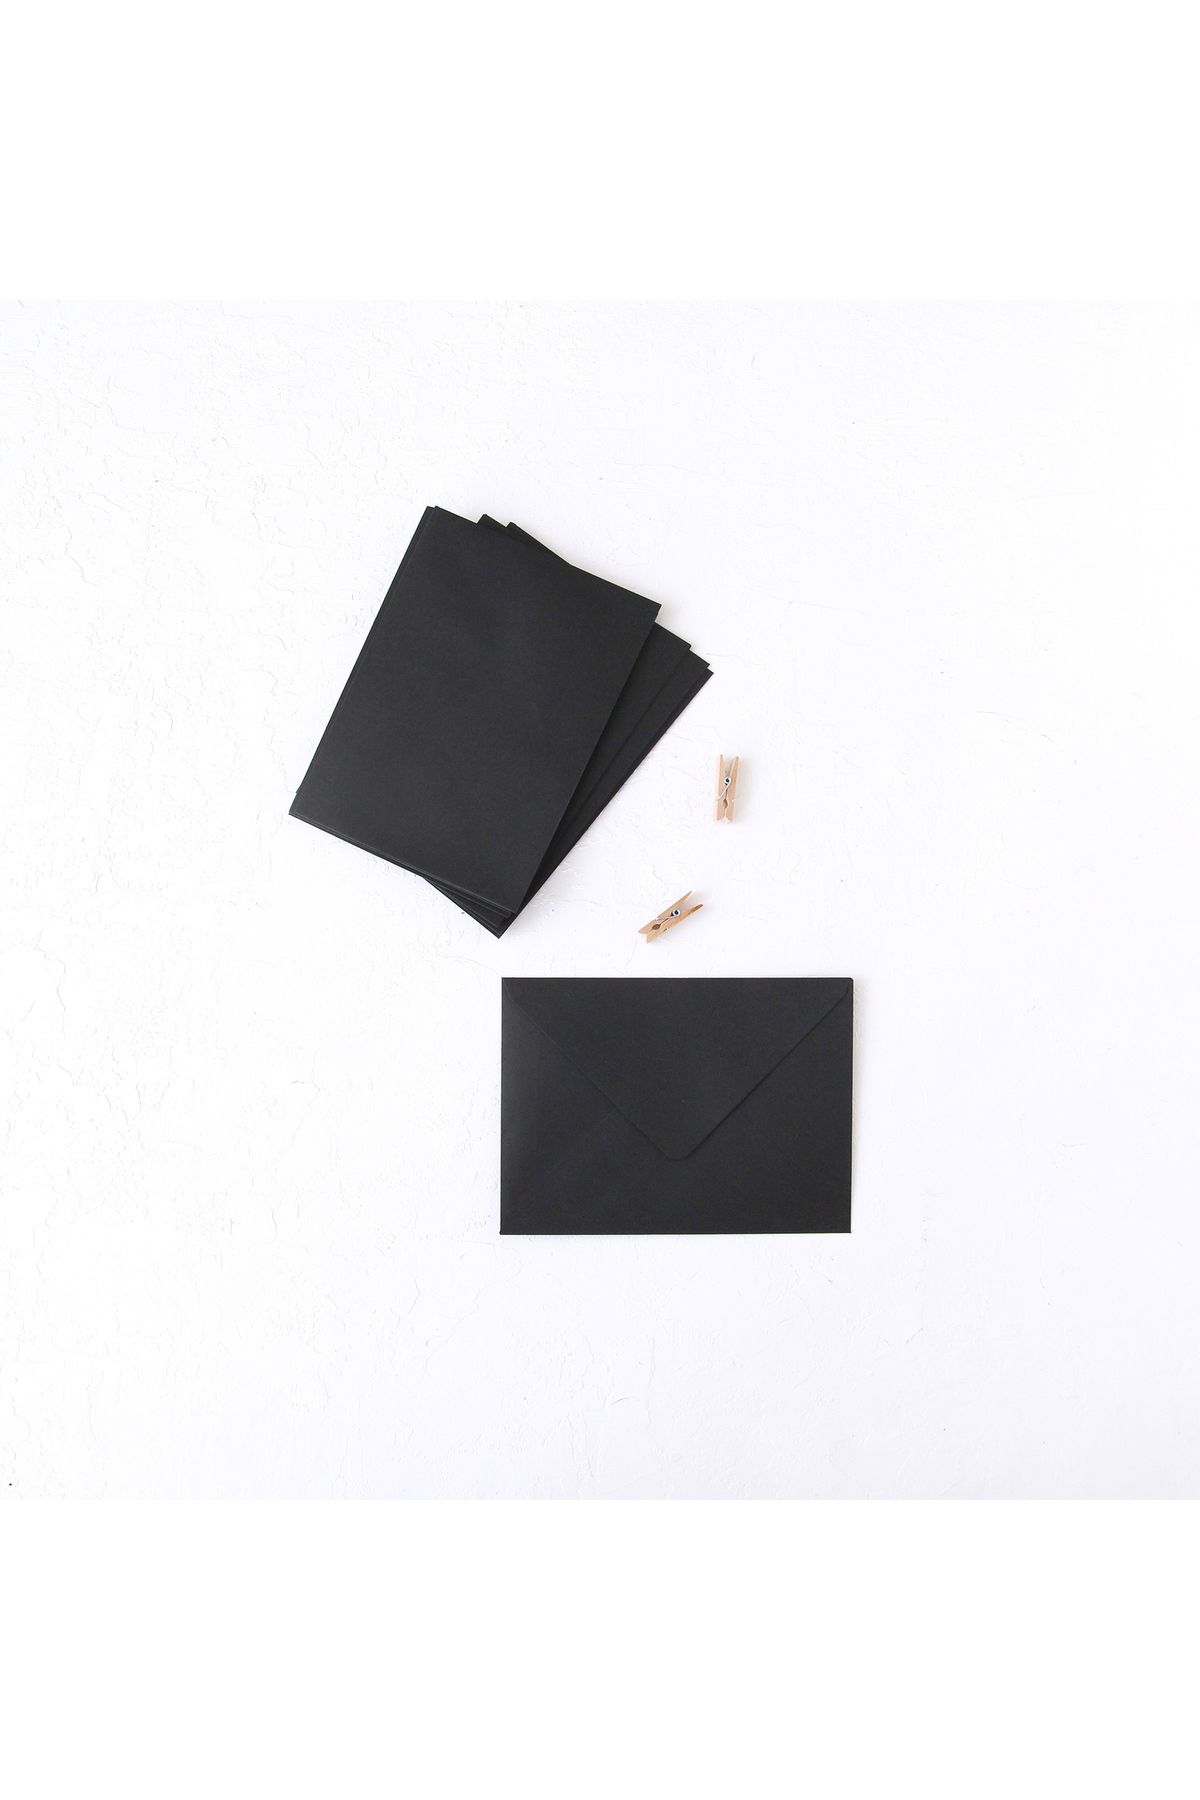 Bimotif Siyah standart zarf, 13x18 cm 25 adet